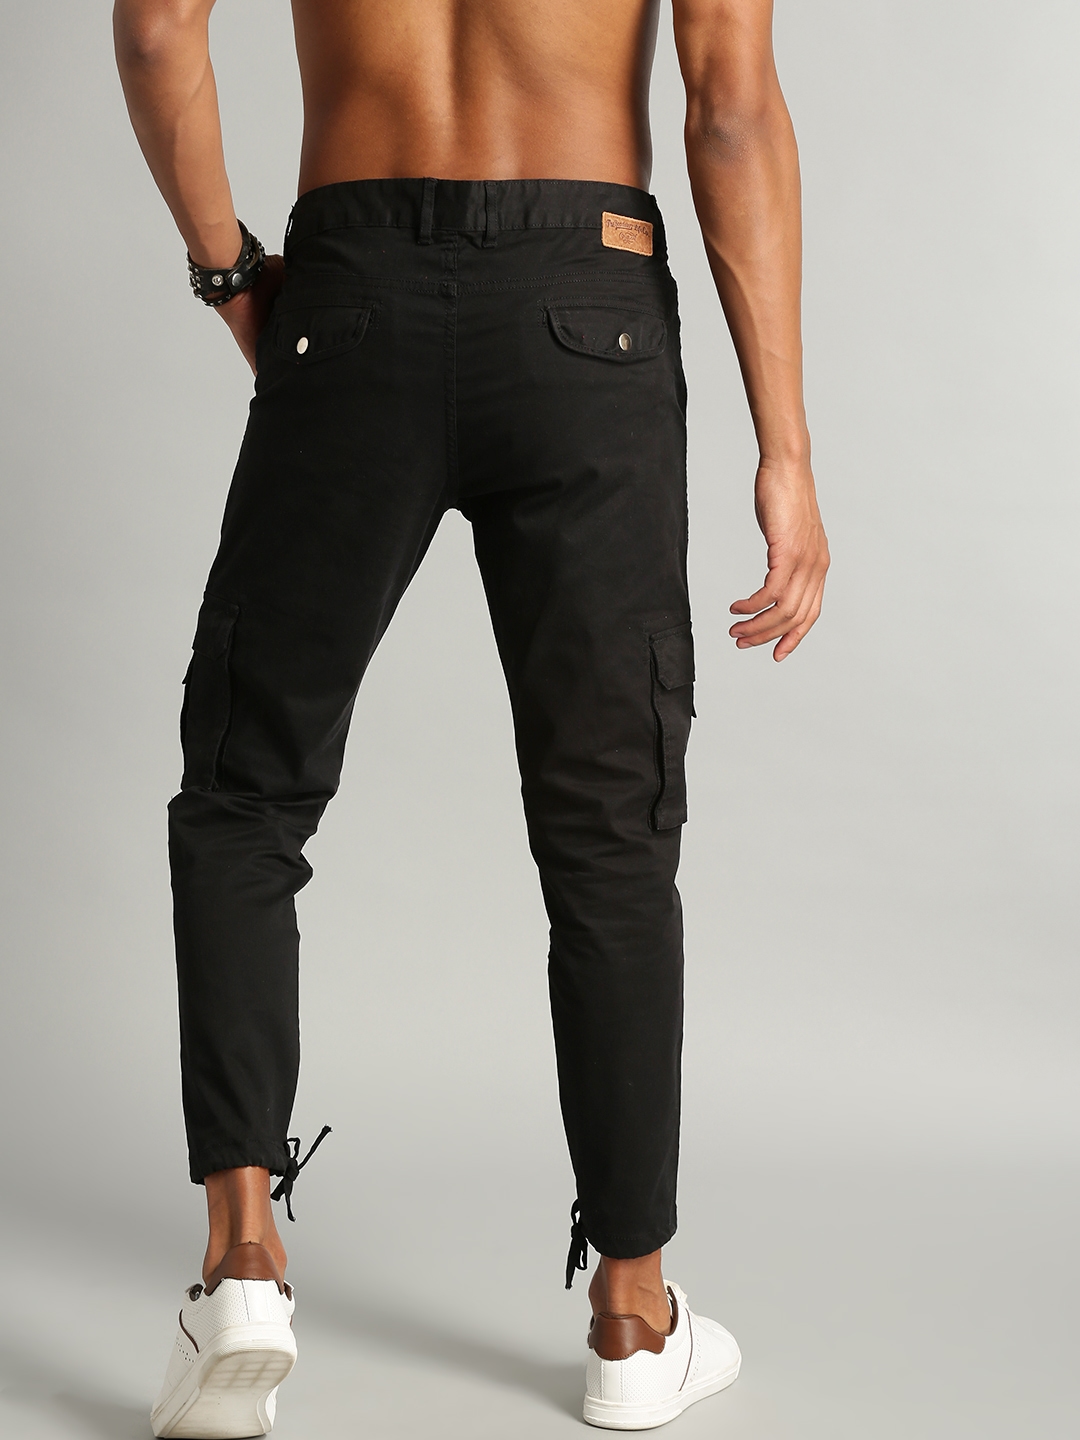 Aggregate 76+ chex pants black latest - in.eteachers